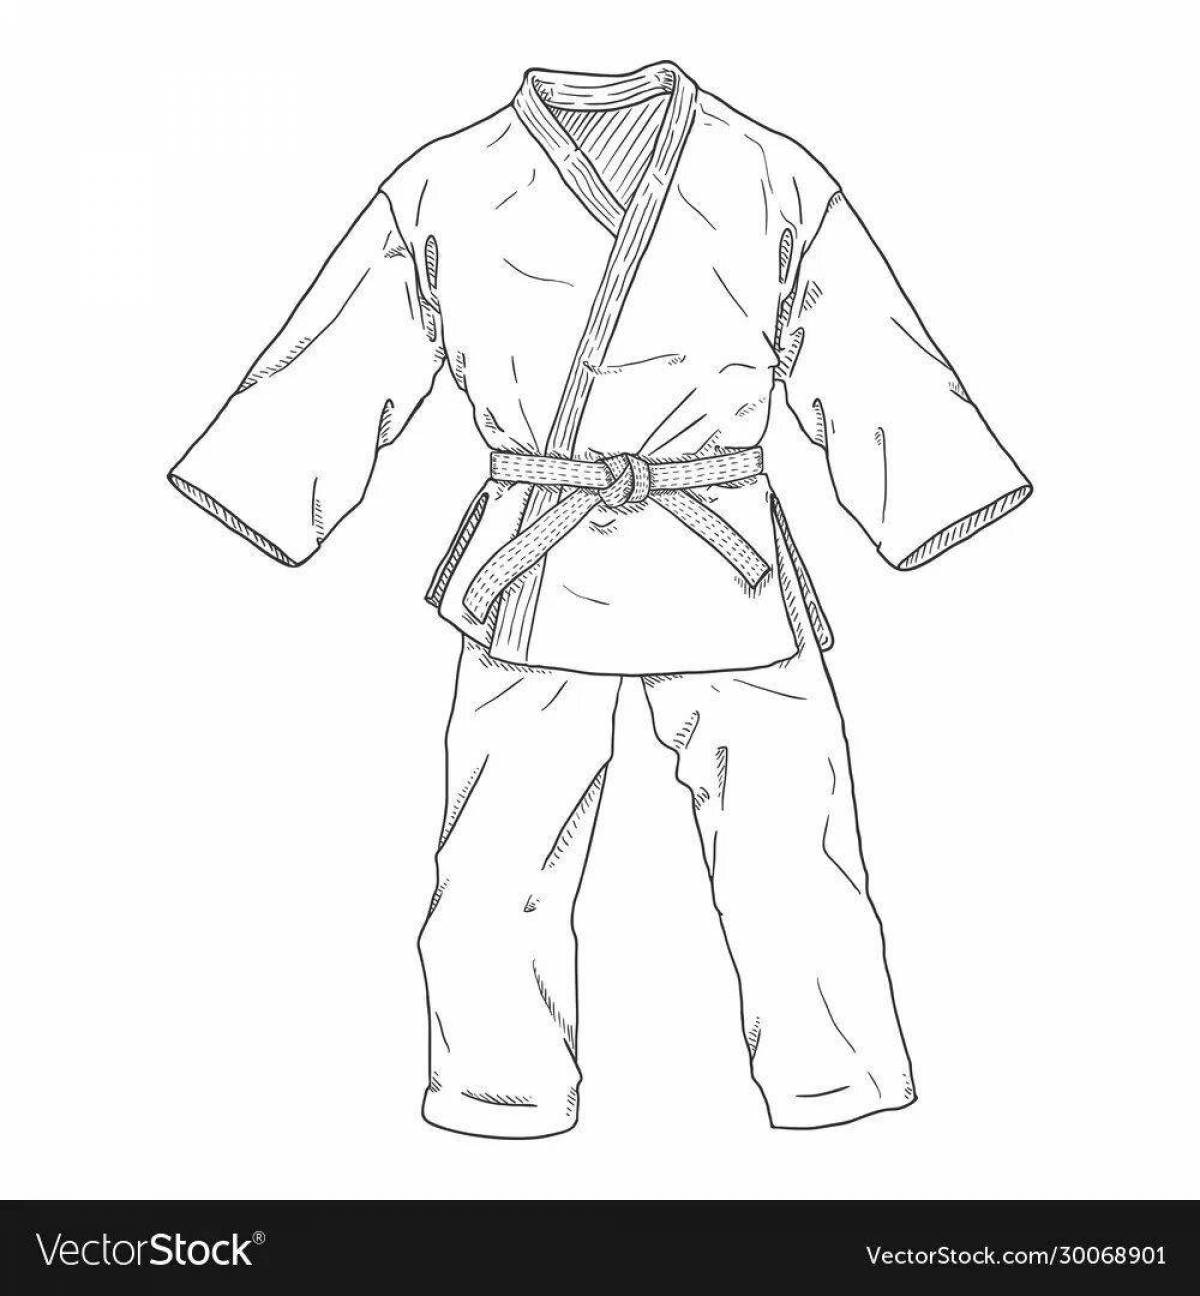 Charming judo kimono coloring book